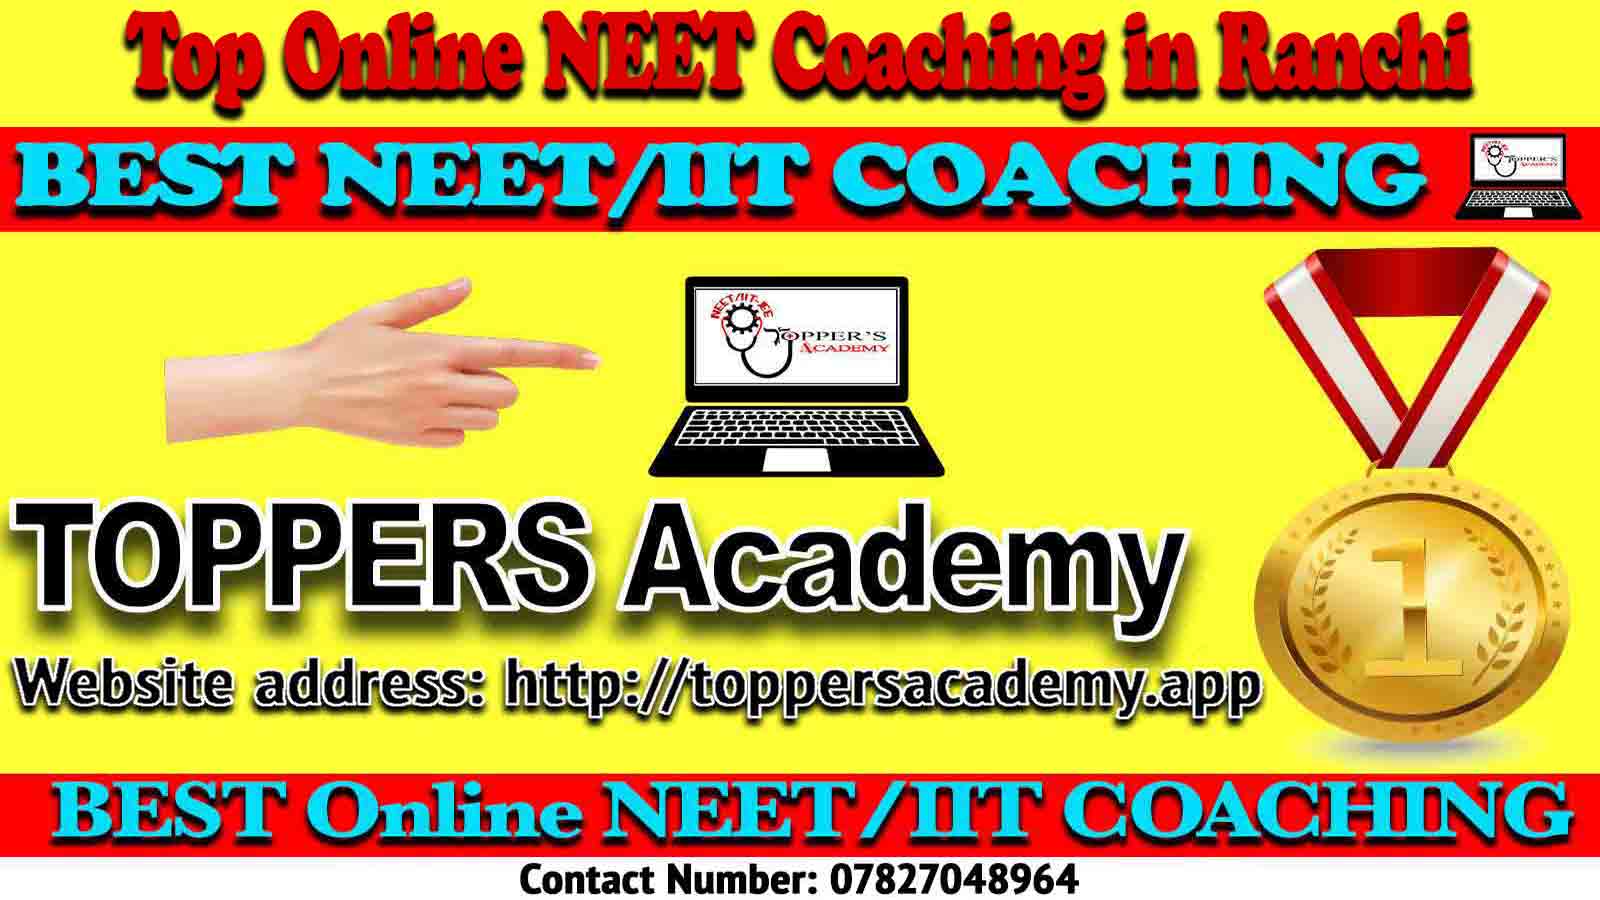 Best Online NEET Coaching in Ranchi